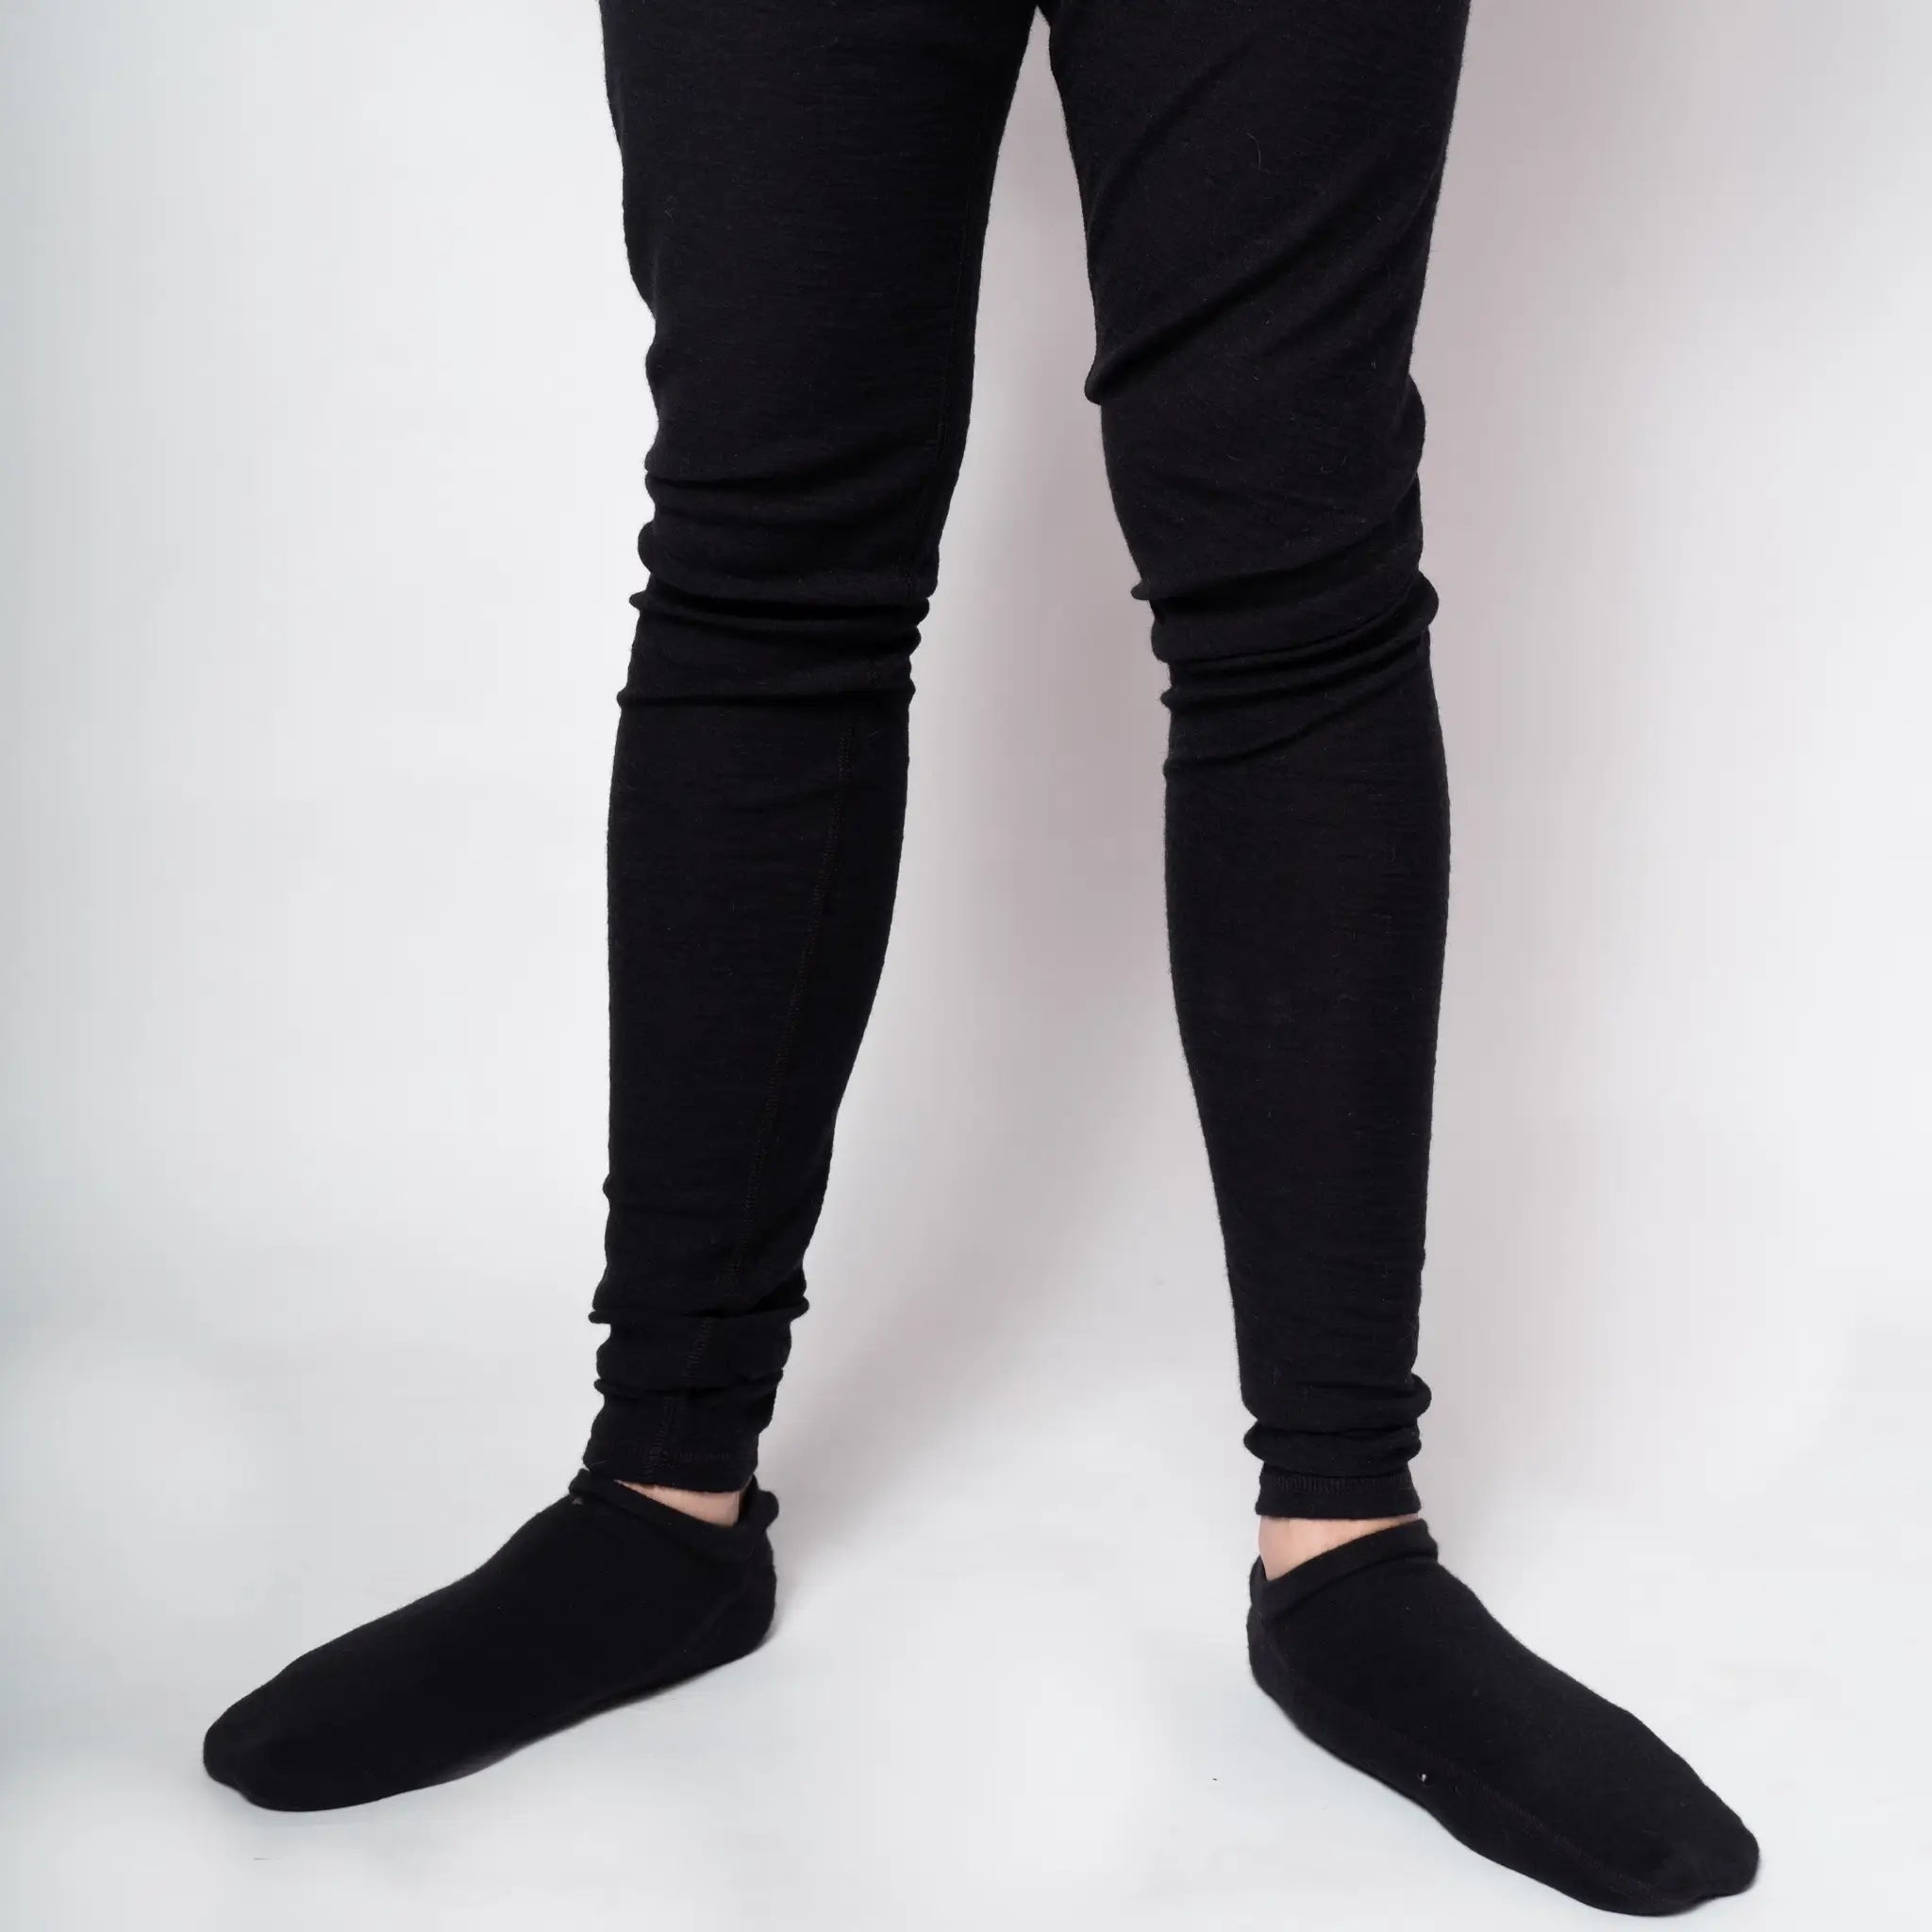 mens leggings ultralight160 best active color black